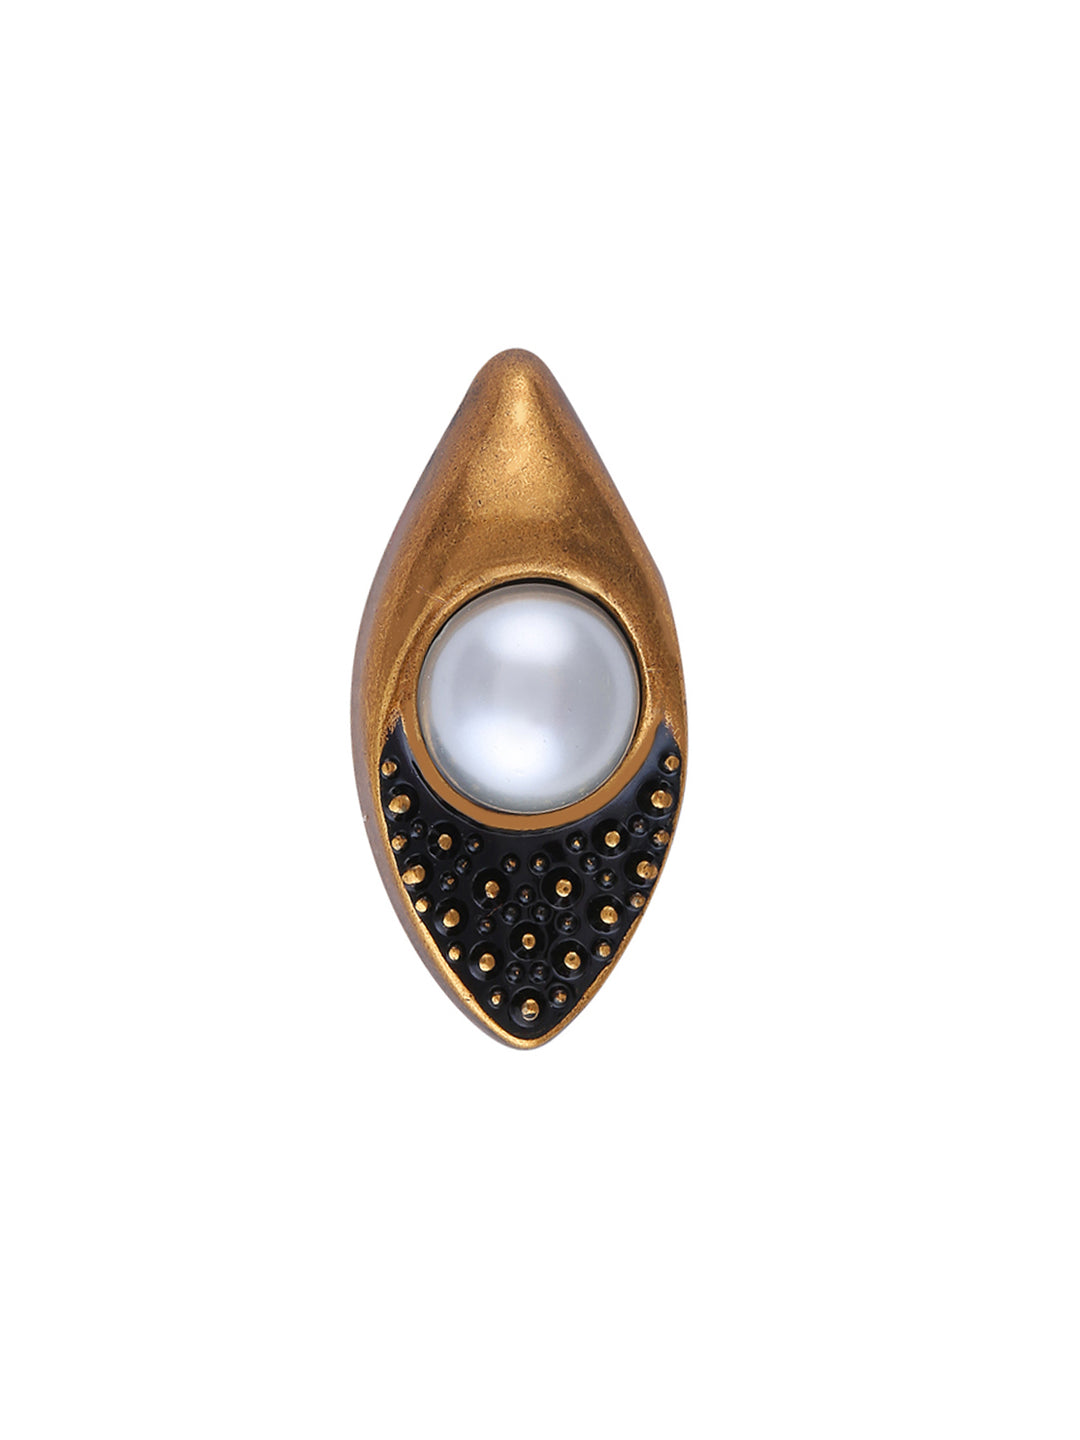 Beautiful Antique Copper Ancient Medieval Design Pearl Button